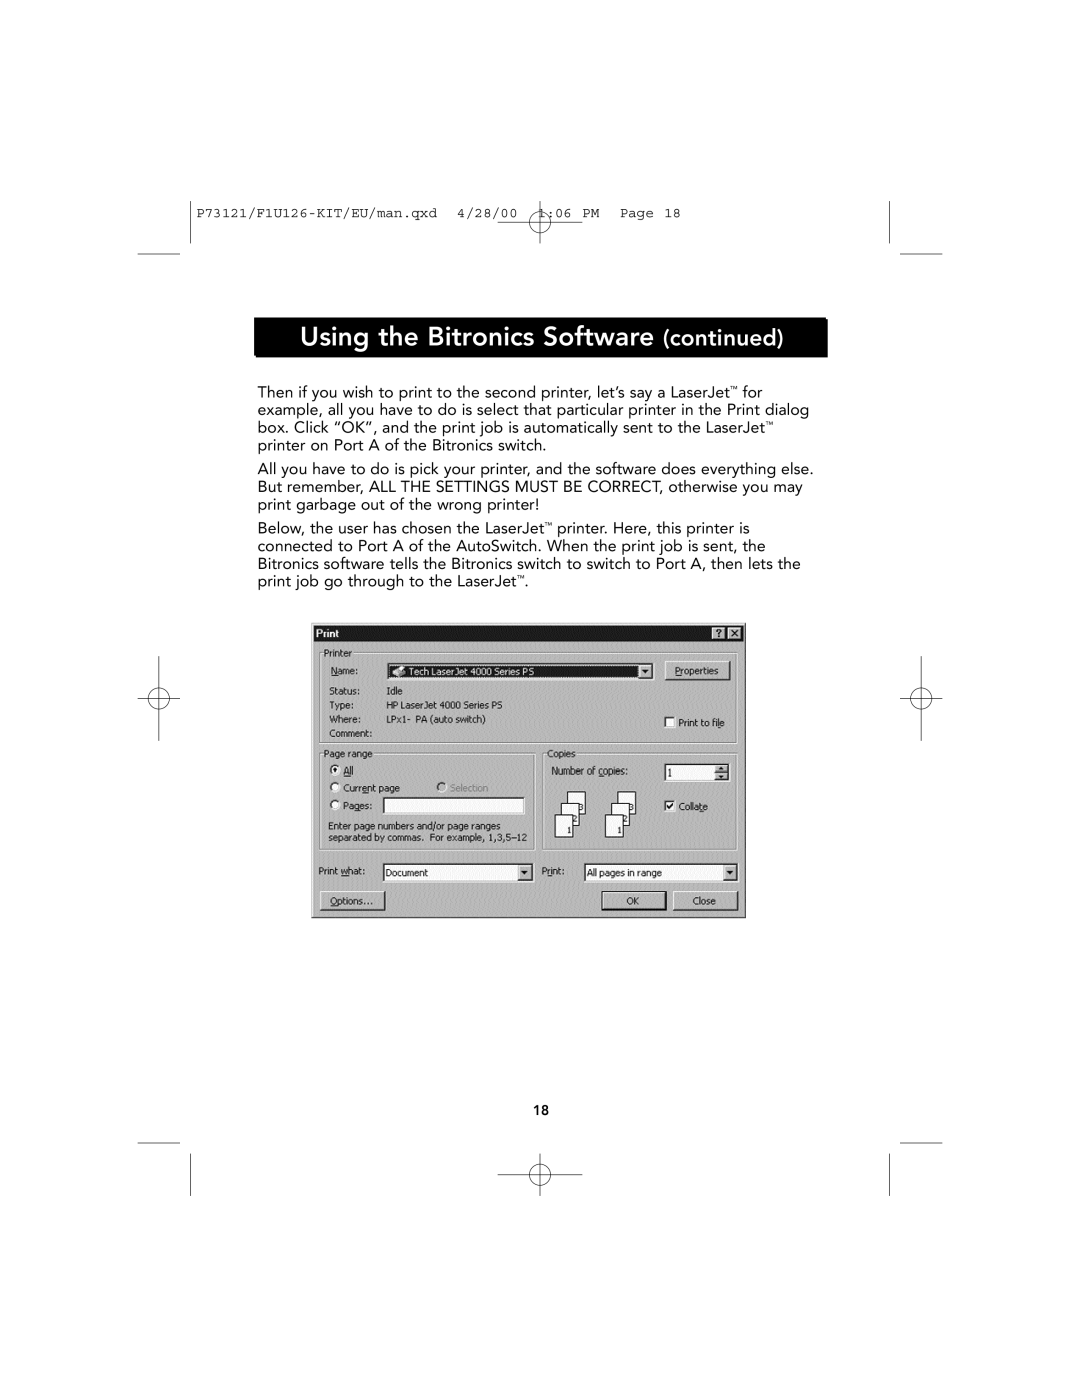 Belkin P73121, F1U126-KIT user manual Using the Bitronics Software continued 